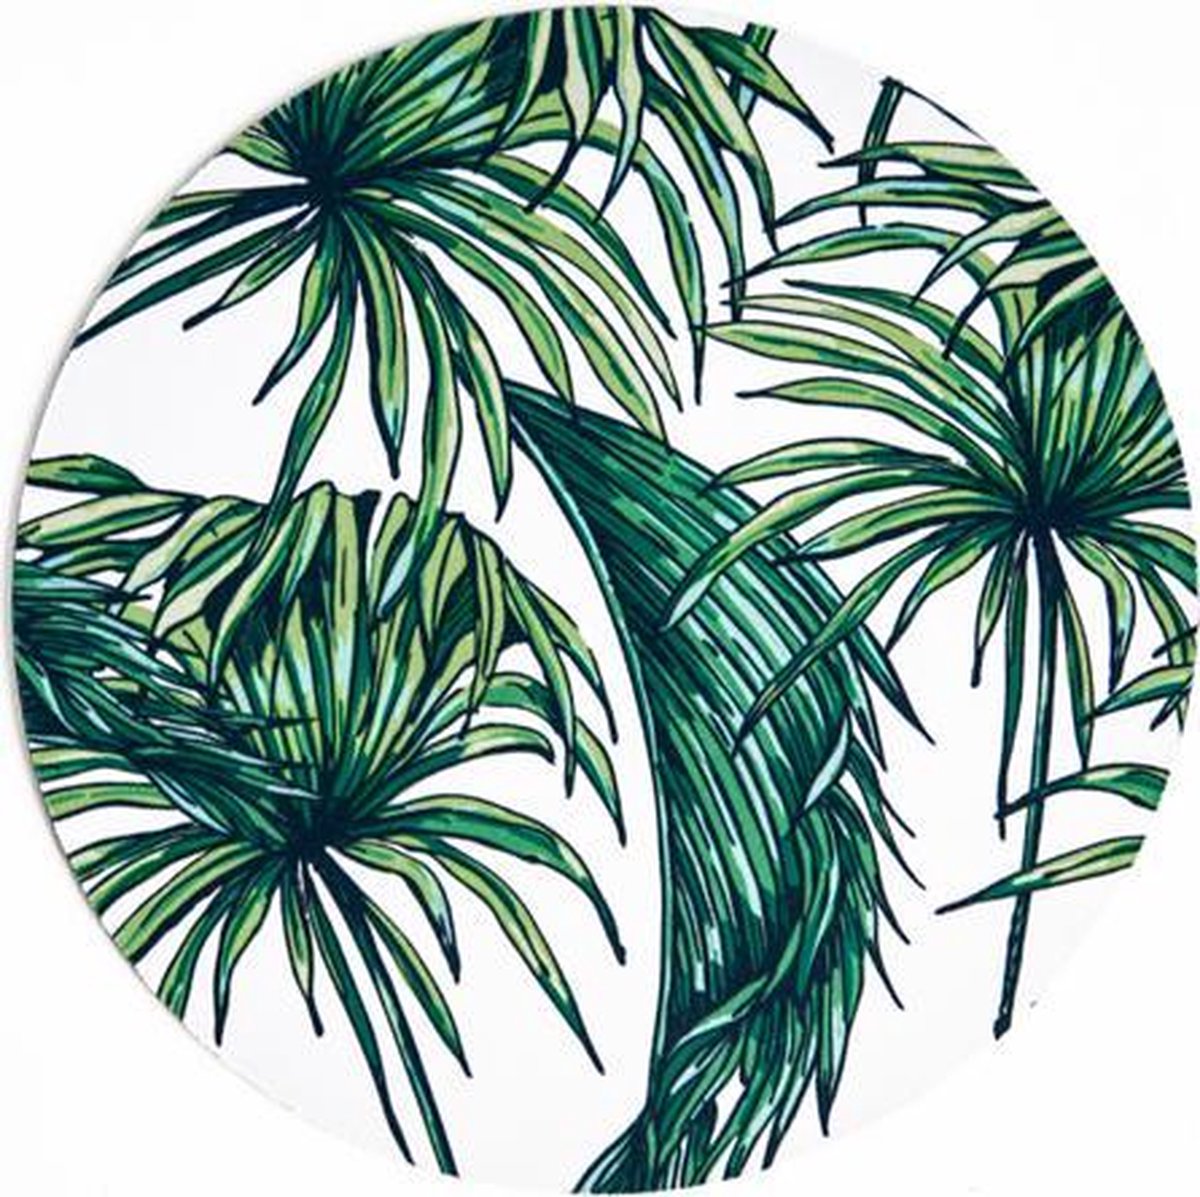 Computer - muismat palm leafs - rond - rubber - buigbaar - anti-slip - mousepad